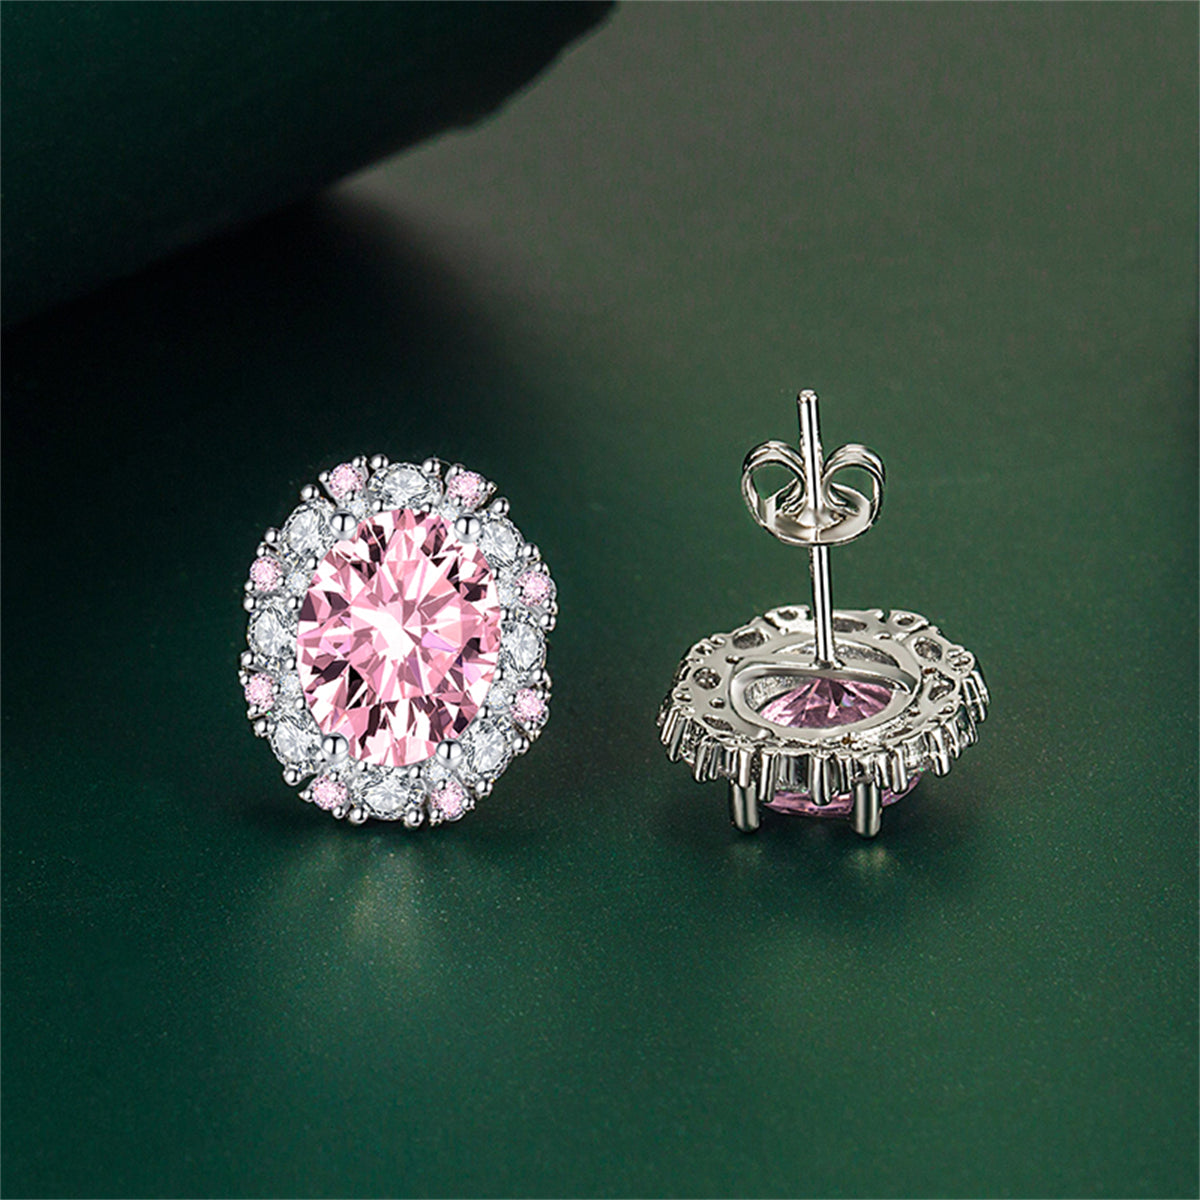 Cubic Zirconia & Pink Crystal Oval Stud Earrings